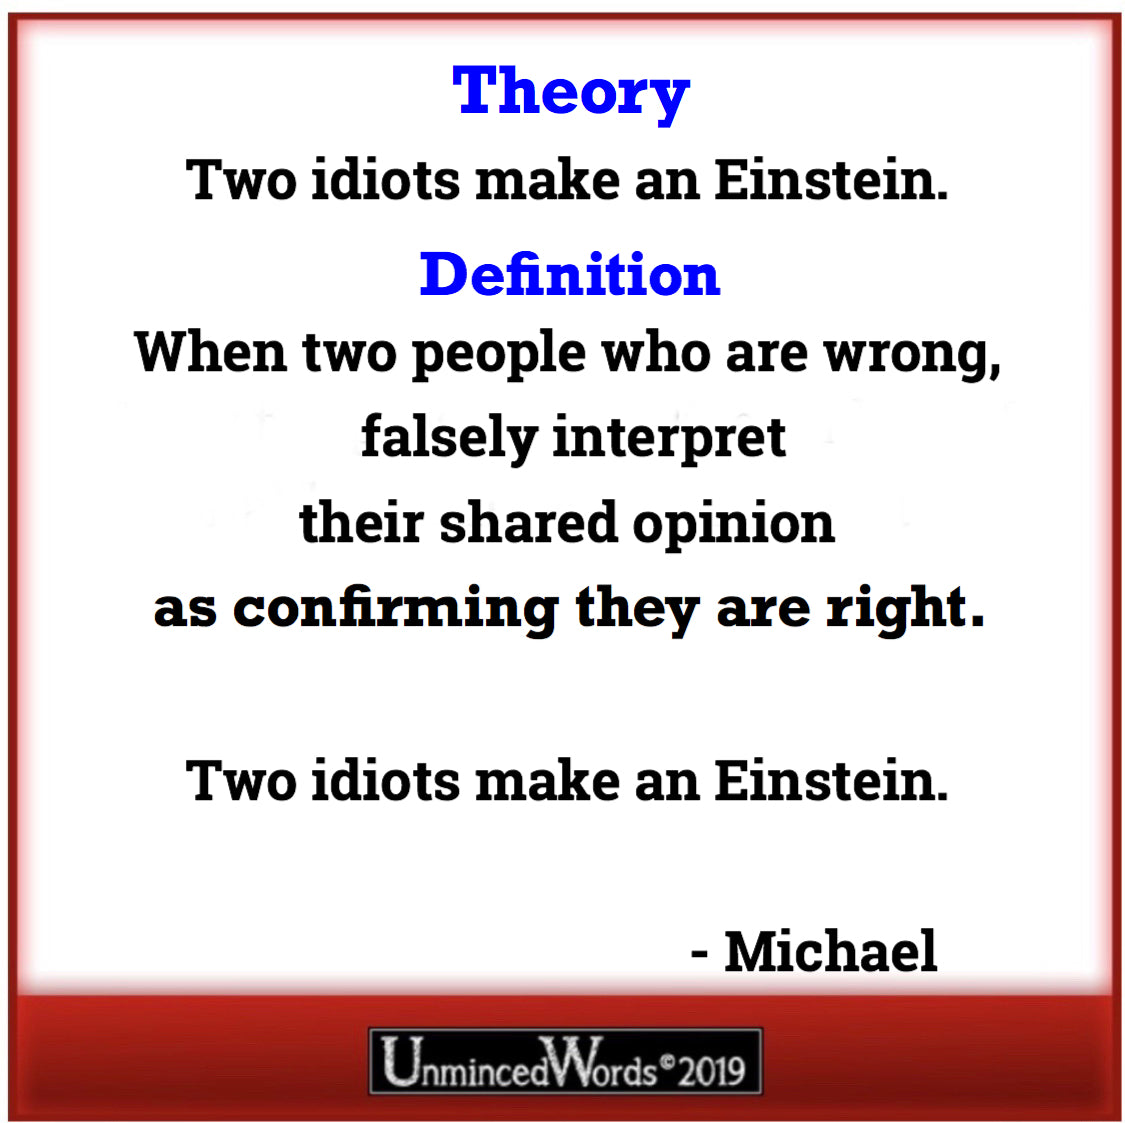 Theory: Two Idiots Make An Einstein